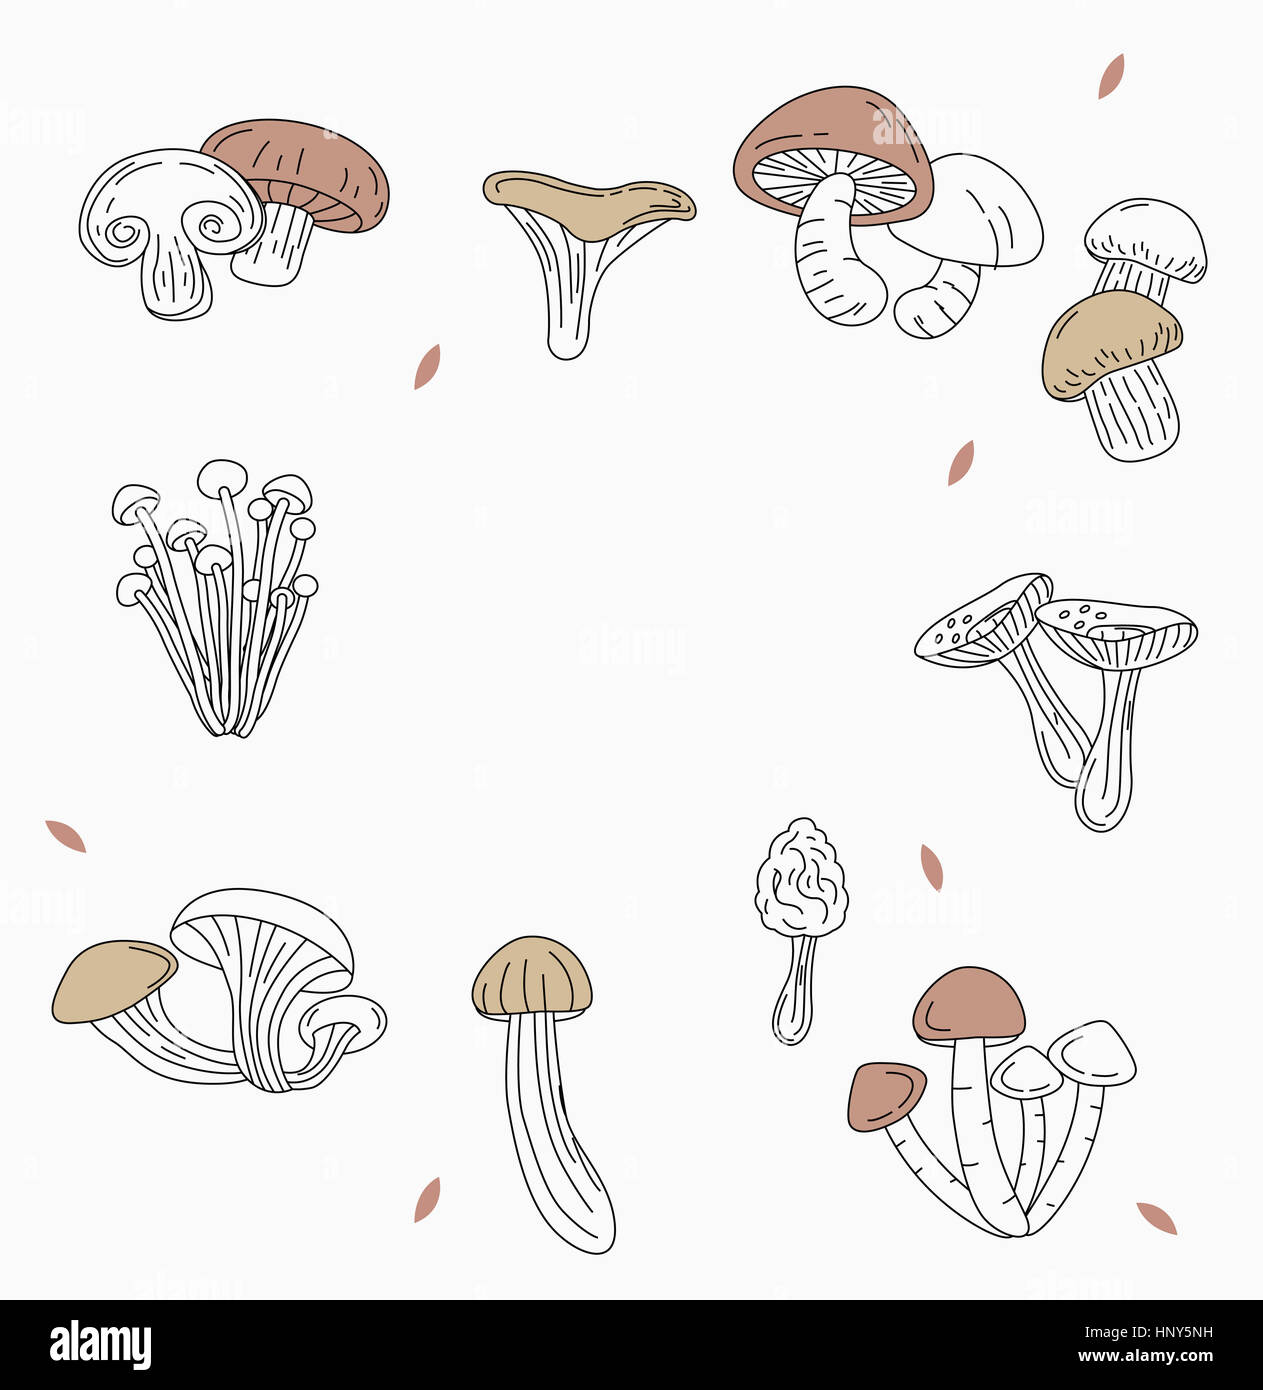 Drawing of various mushrooms Stock Photo